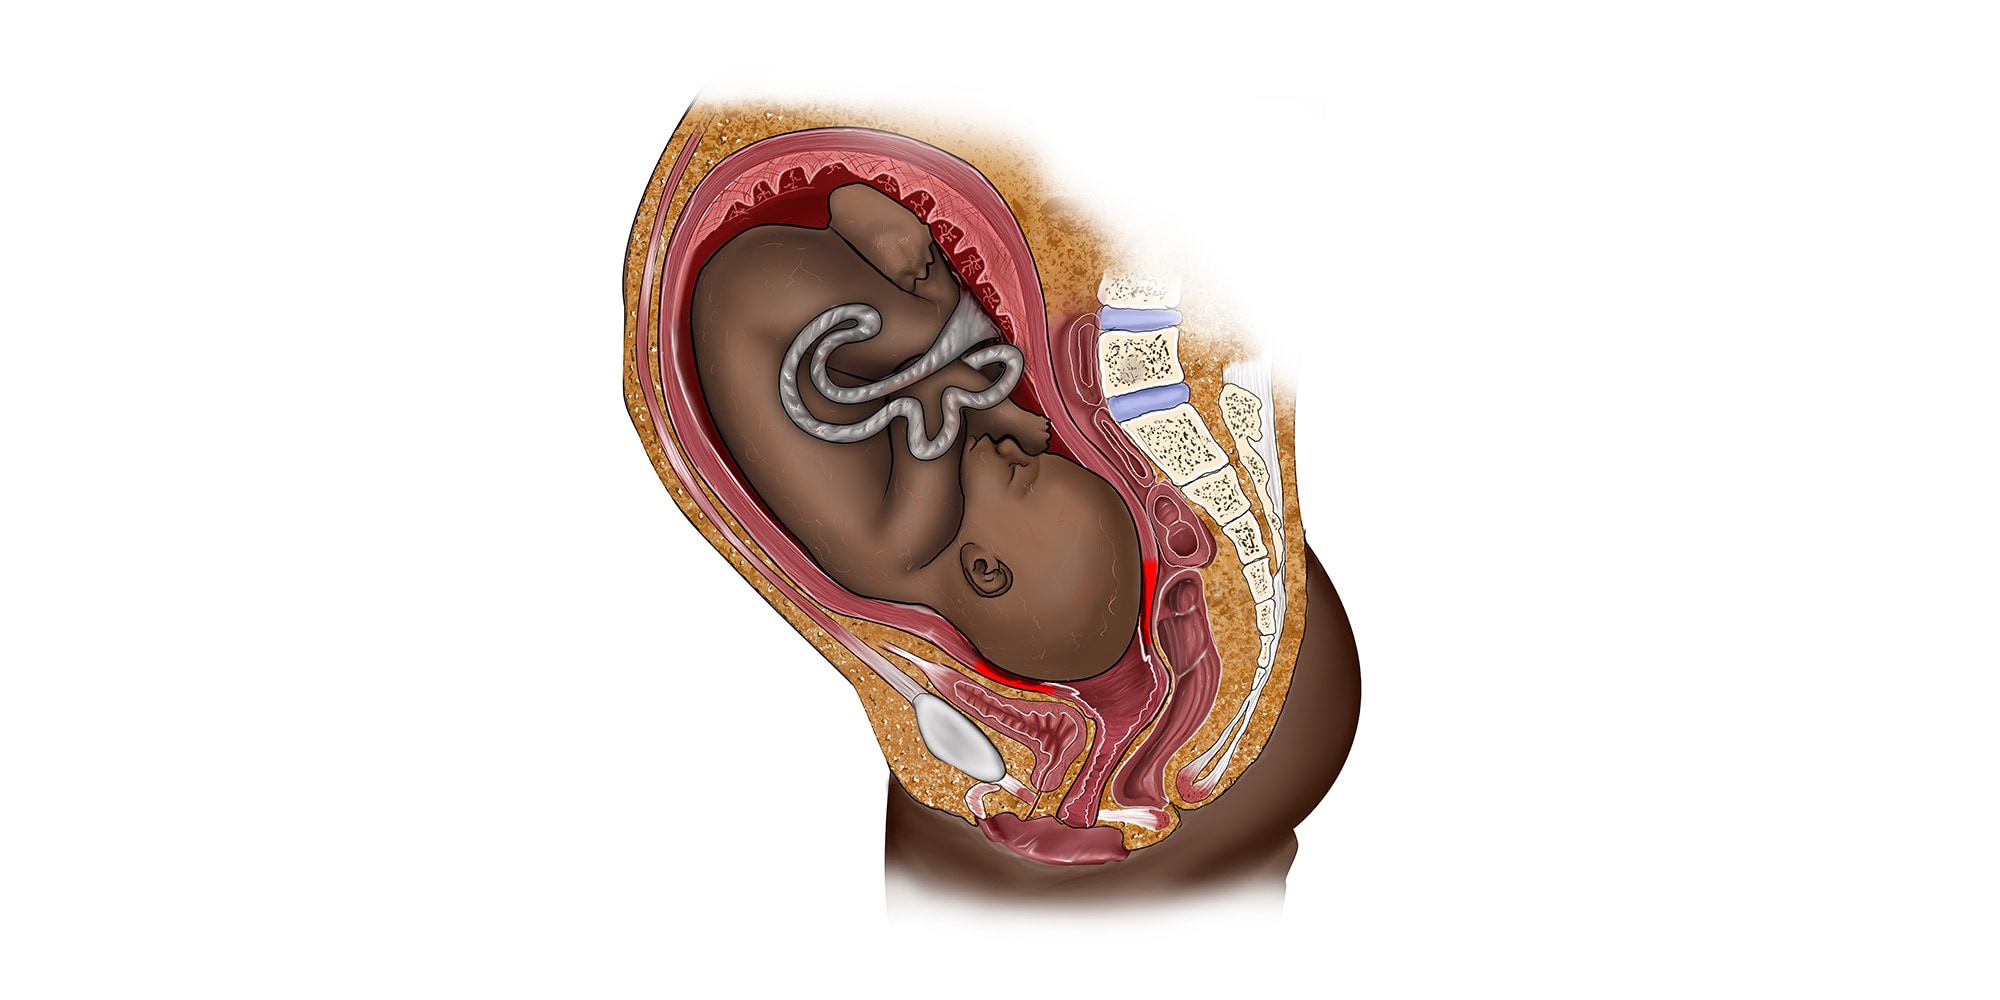 Black fetus in womb